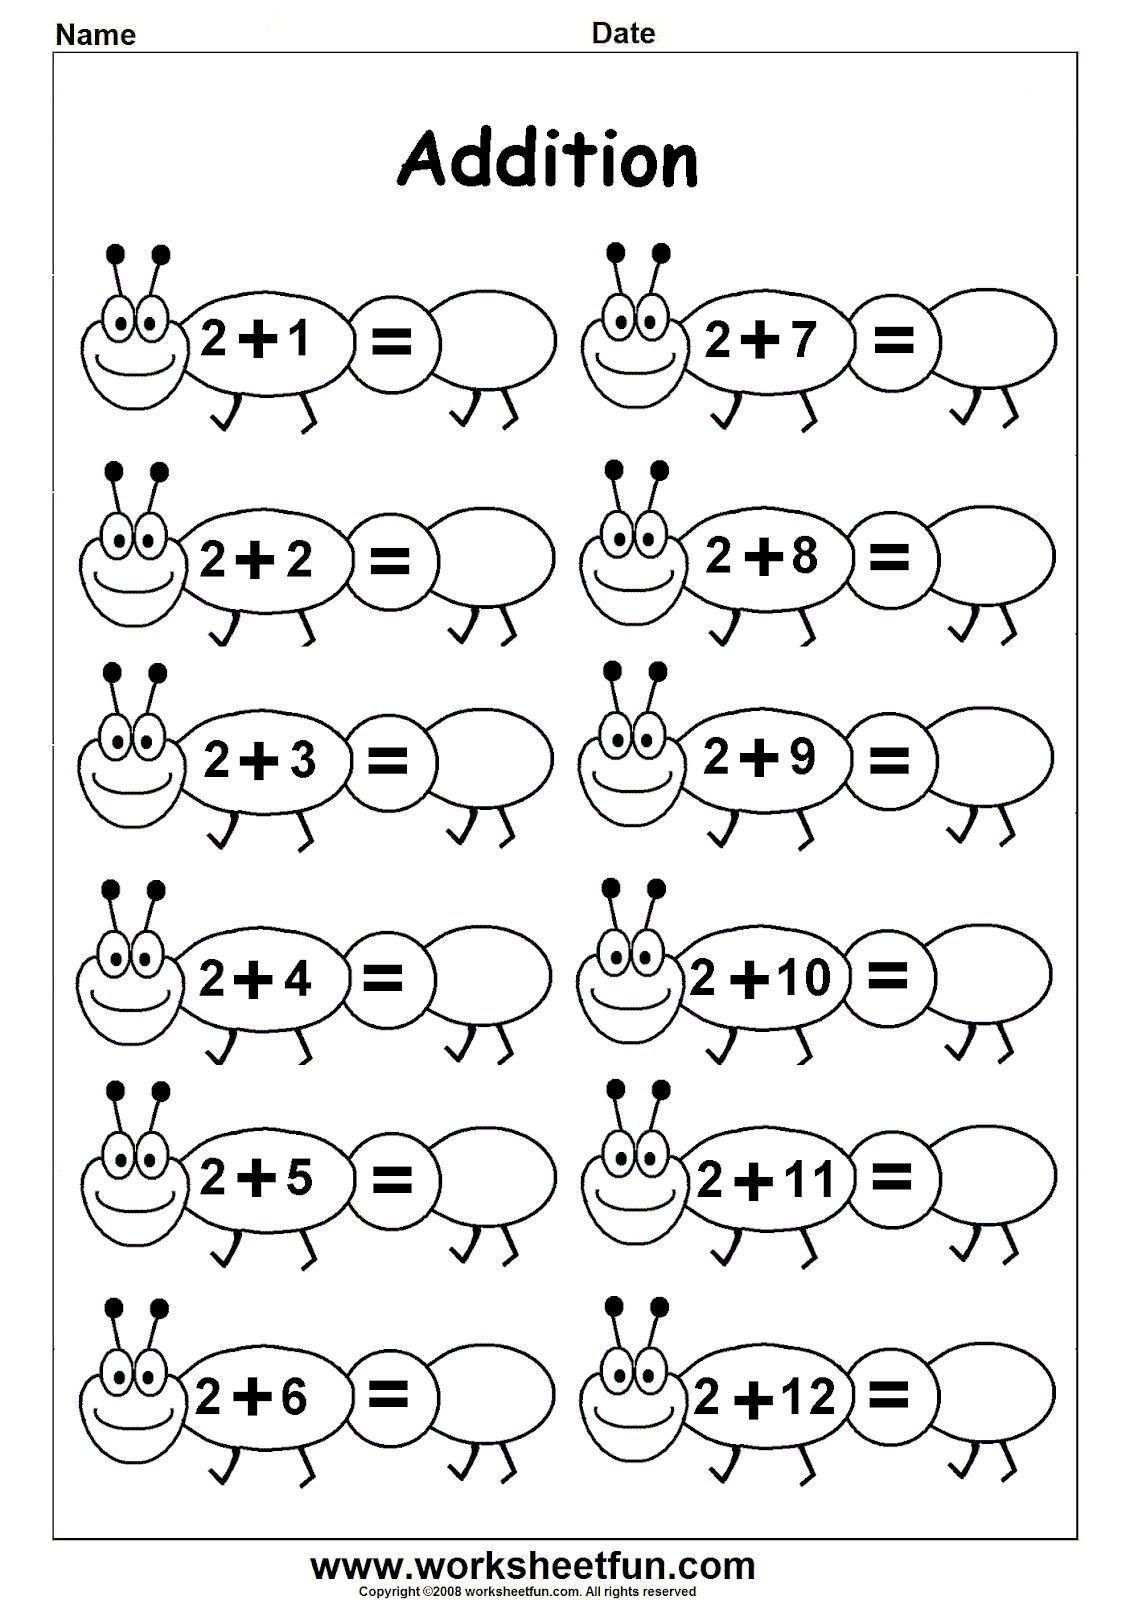 Worksheetfun FREE PRINTABLE WORKSHEETS 1st Grade Math Worksheets Kindergarten Math Kindergarten Math Worksheets Addition